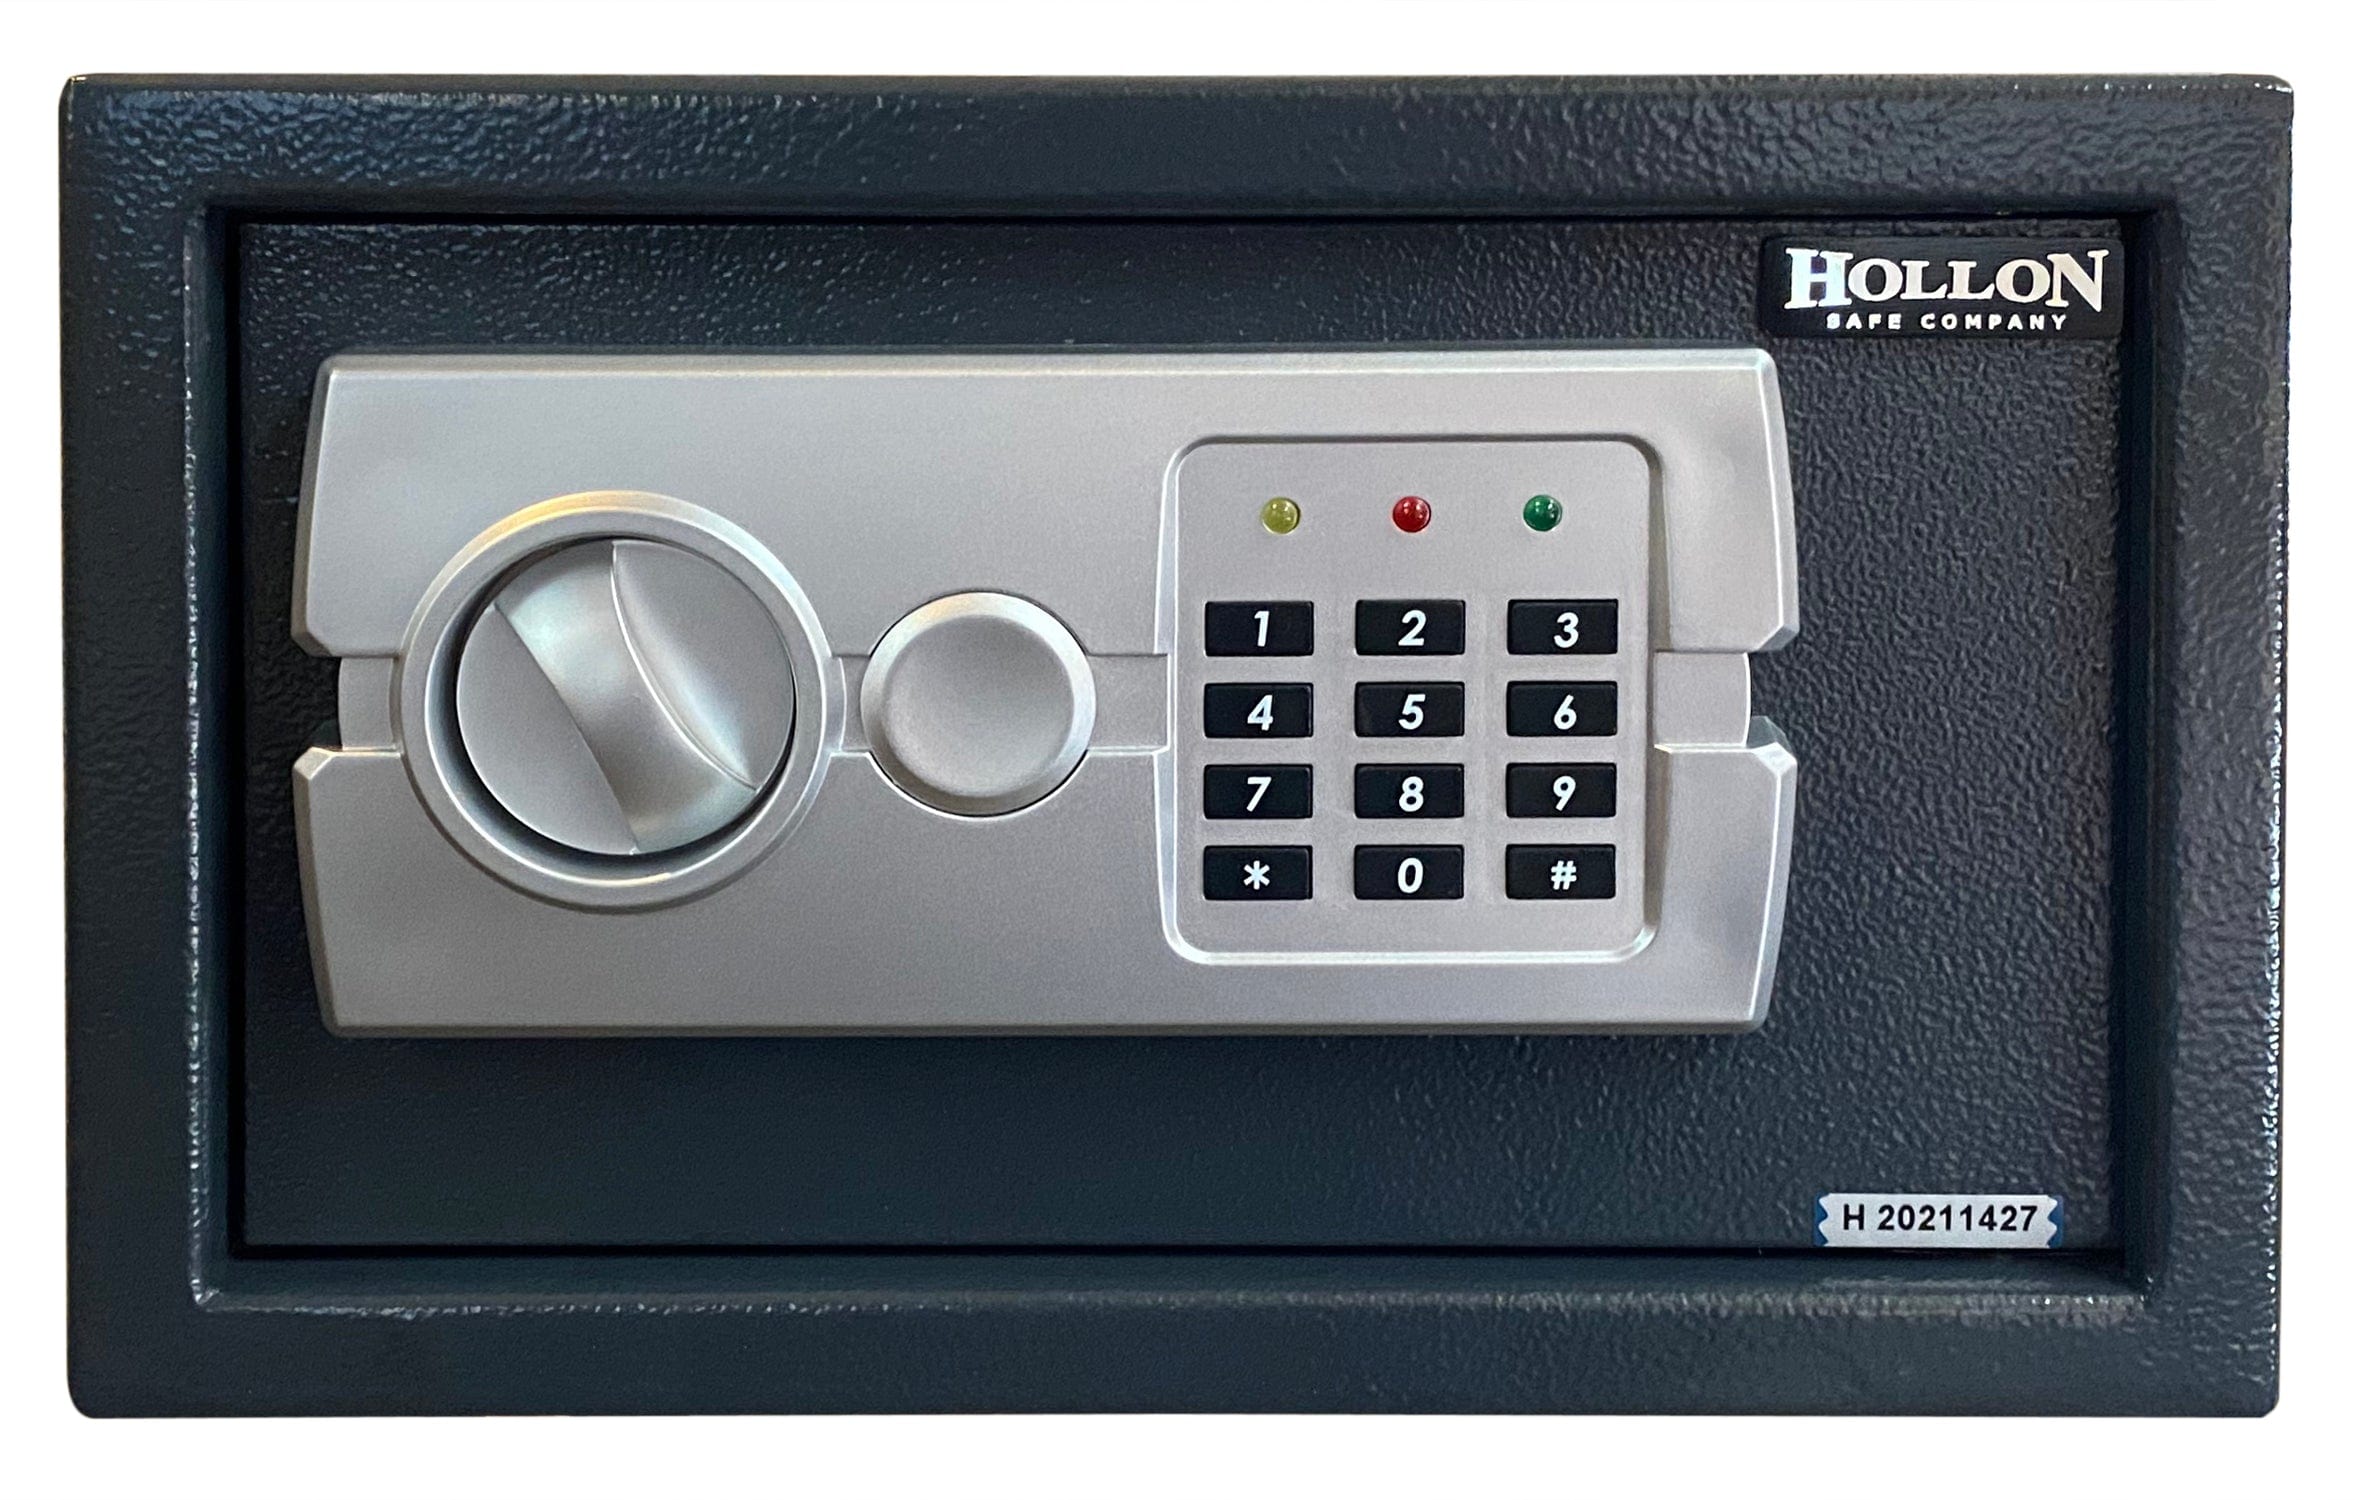 Hollon Safes Compact E20 Hotel Safes E20